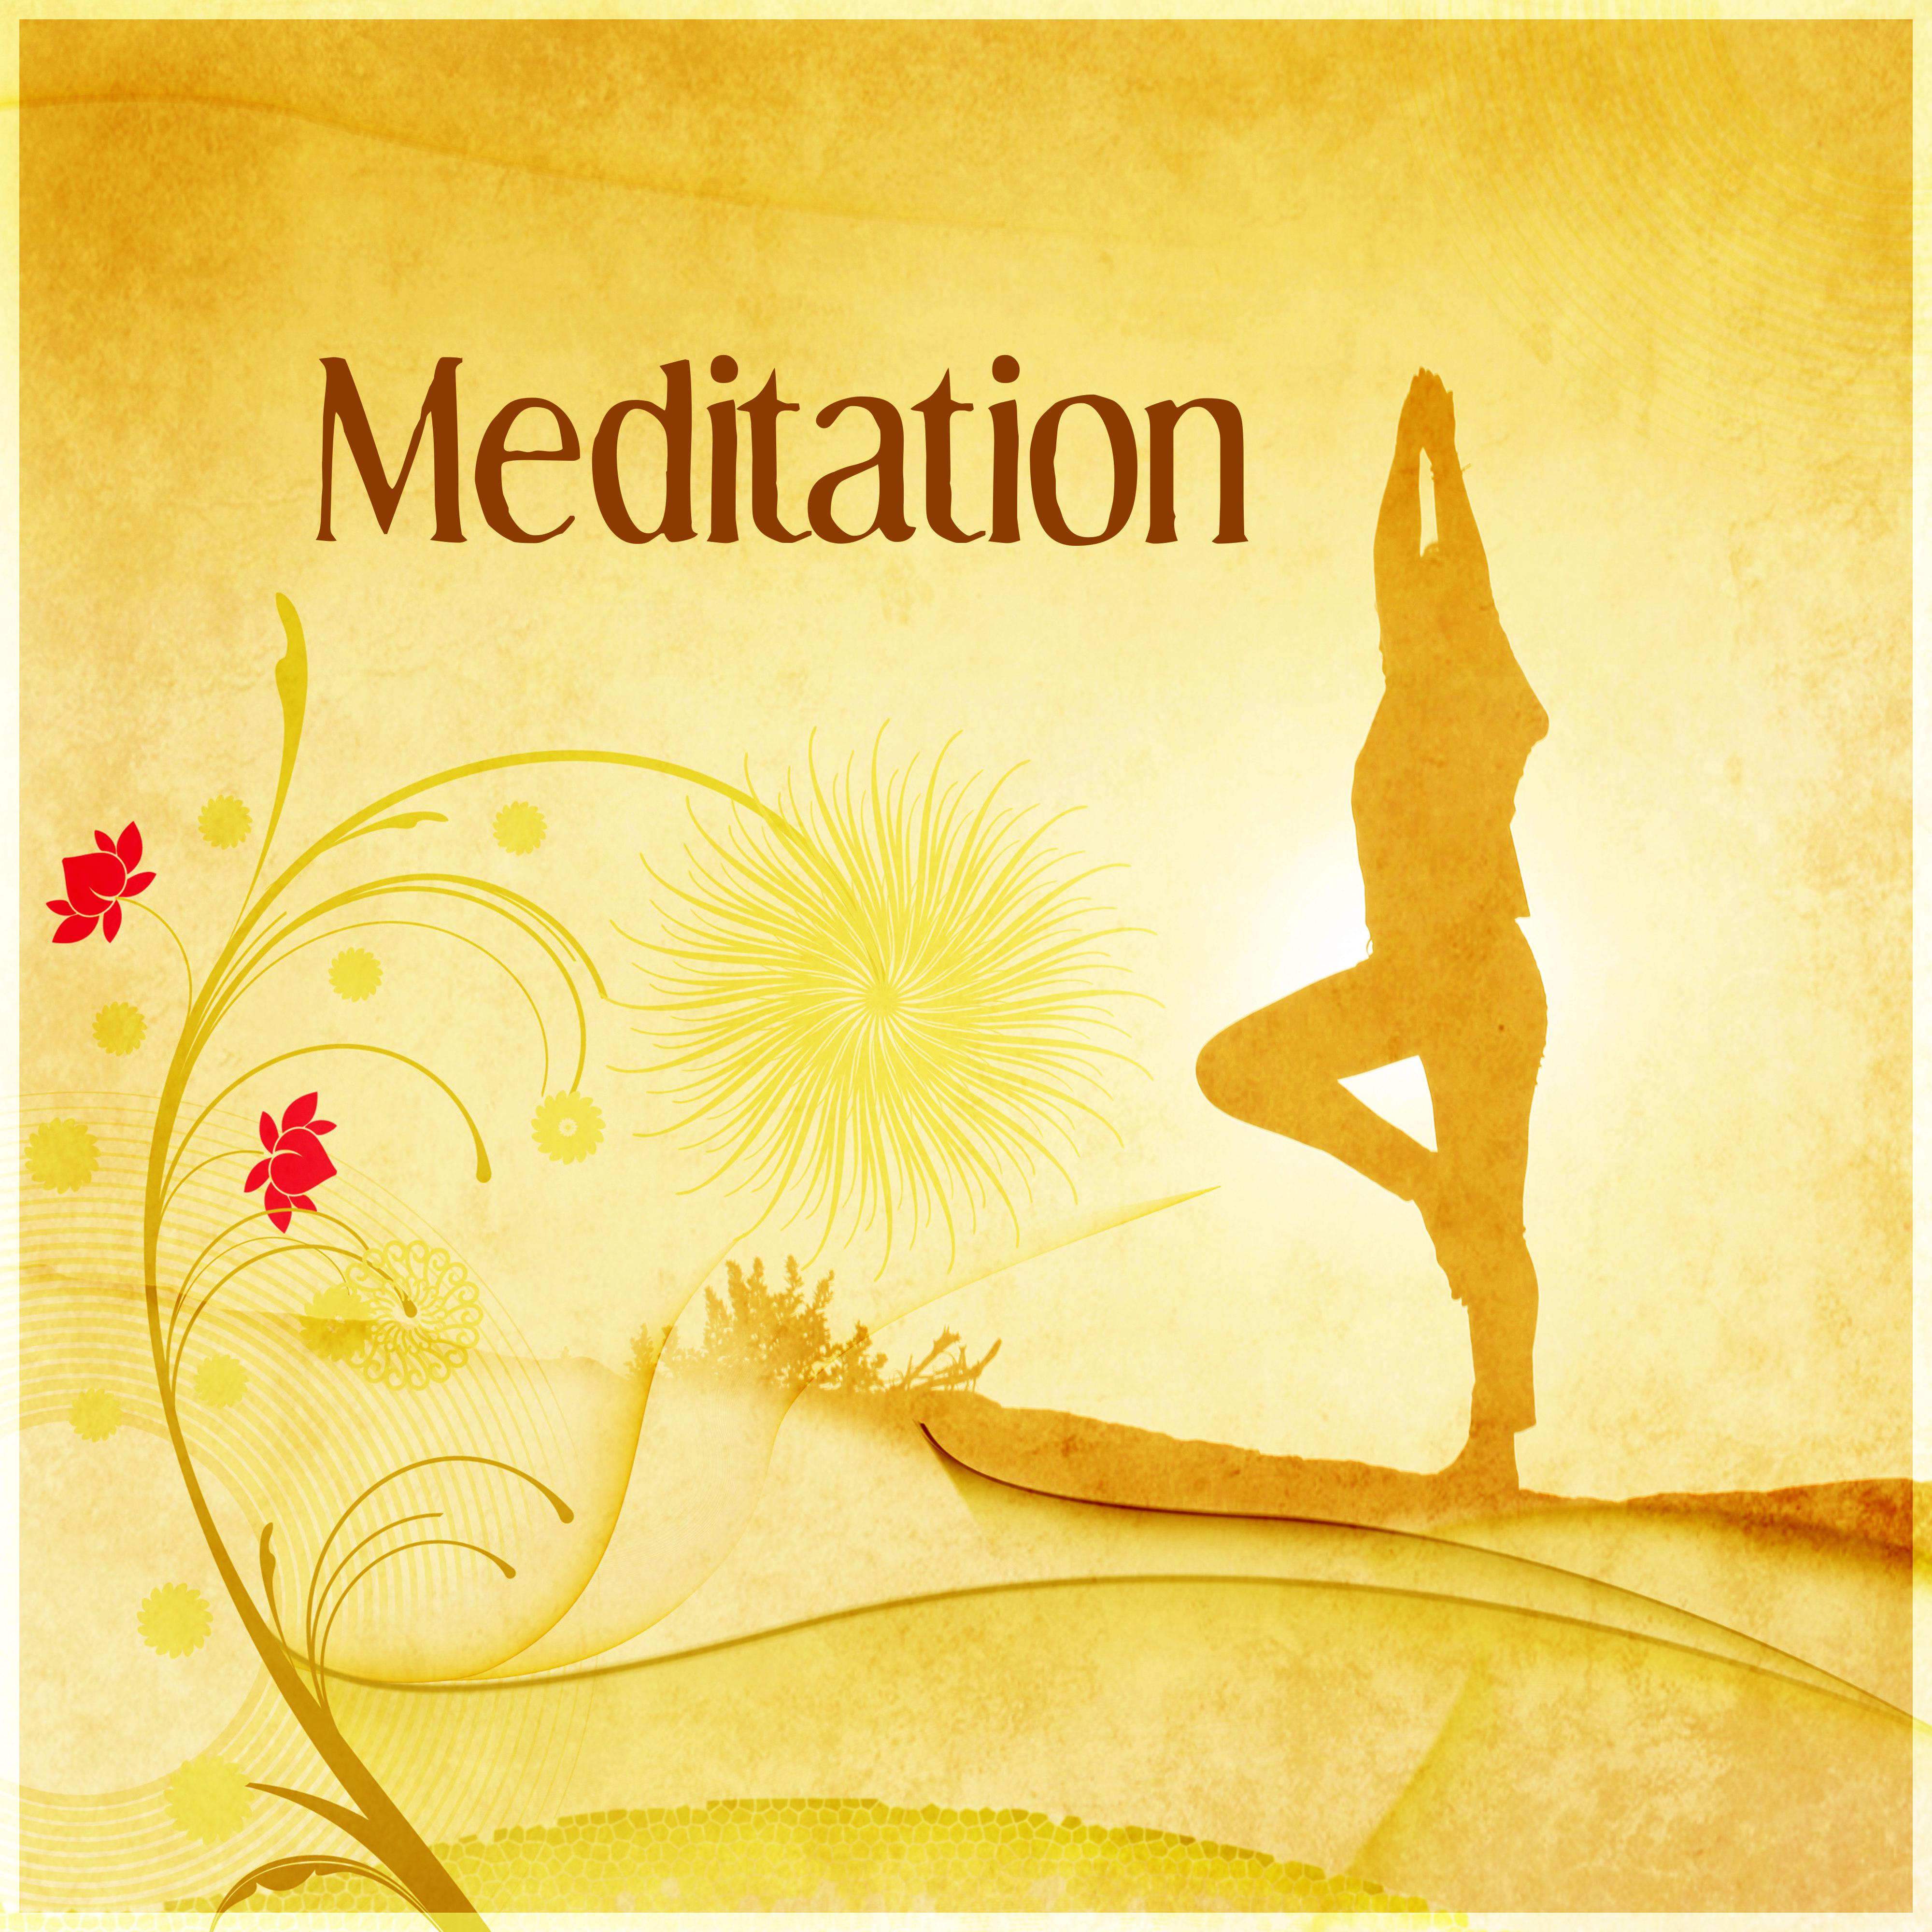 Meditation  Mindfulness, Deep Relaxation, Healing Music, Yoga, Concentration, Yin Yang